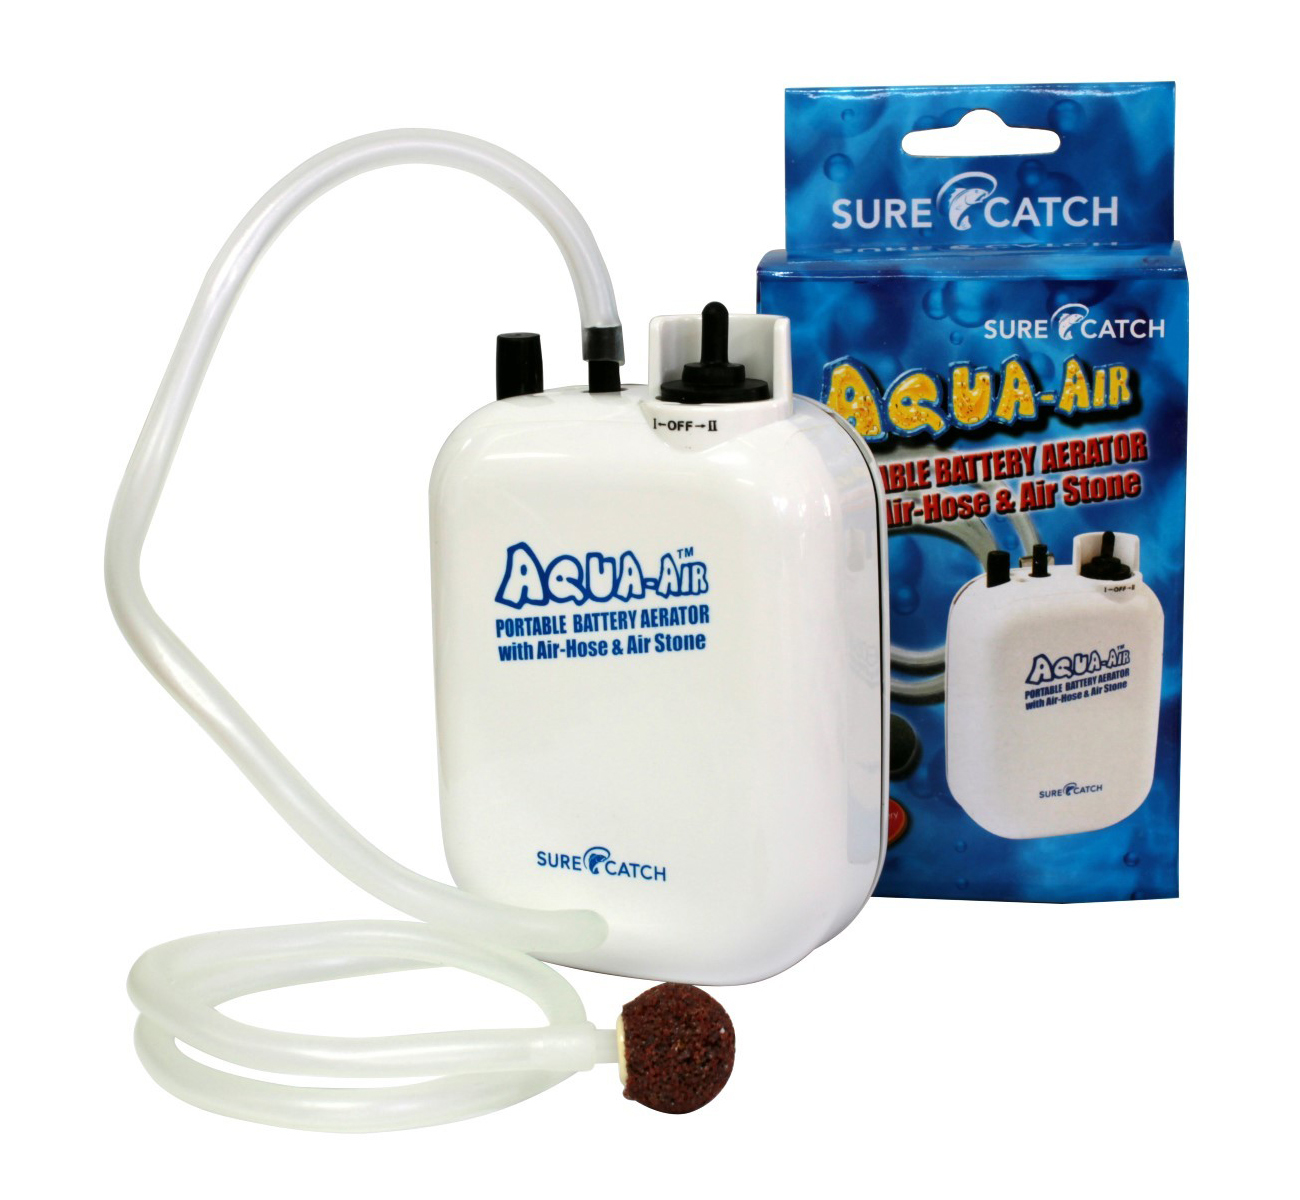 Aqua-Air Waterproof Portable Aerator Pump-Battery Operated with